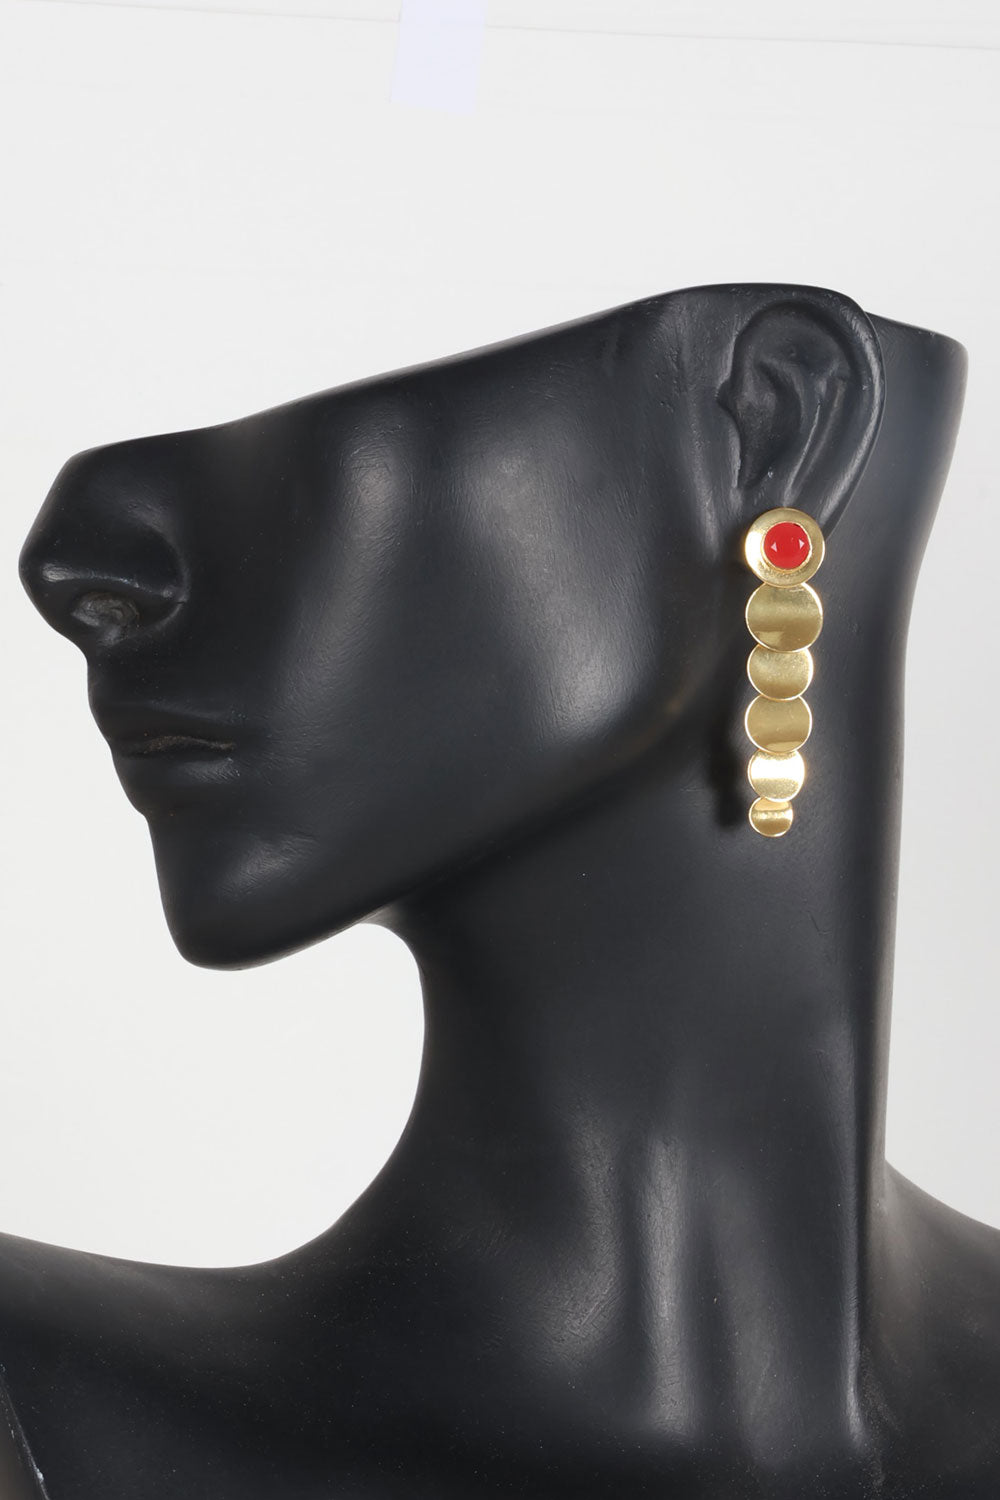 Handcrafted Gold Tone Drop Brass Earrings 10061357